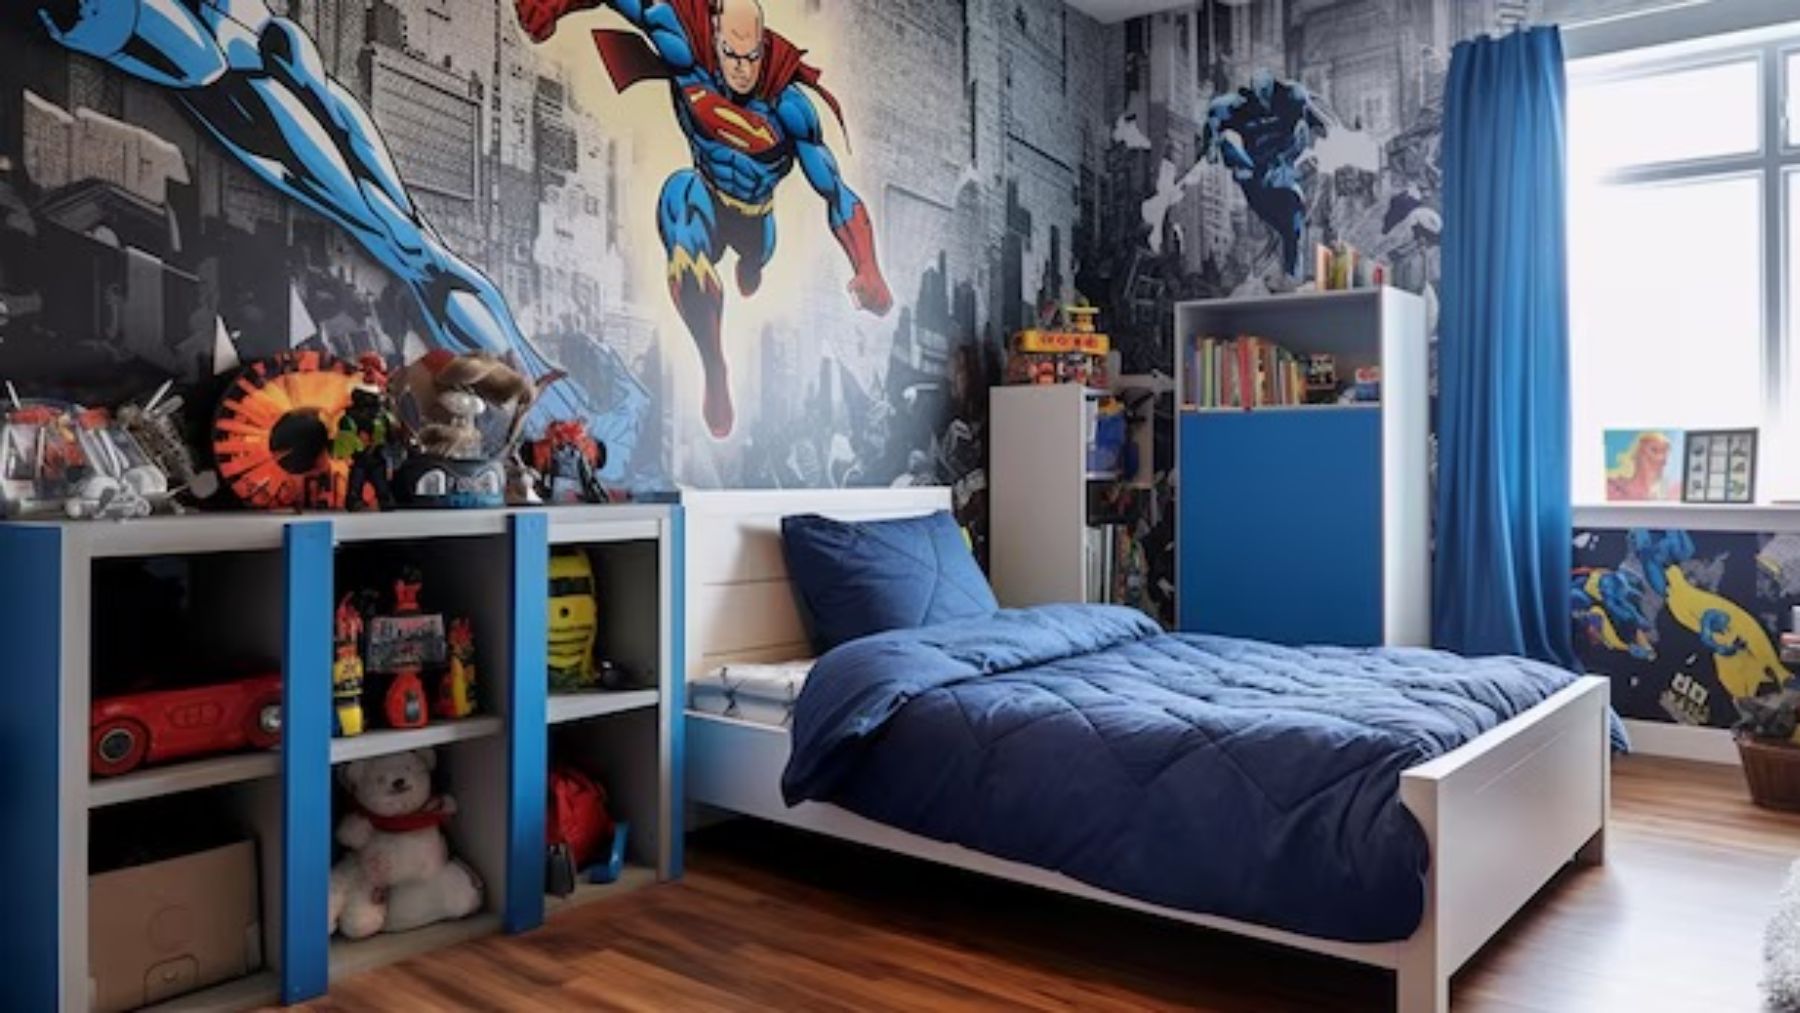 Dormitorio de superhéroes (Freepik).